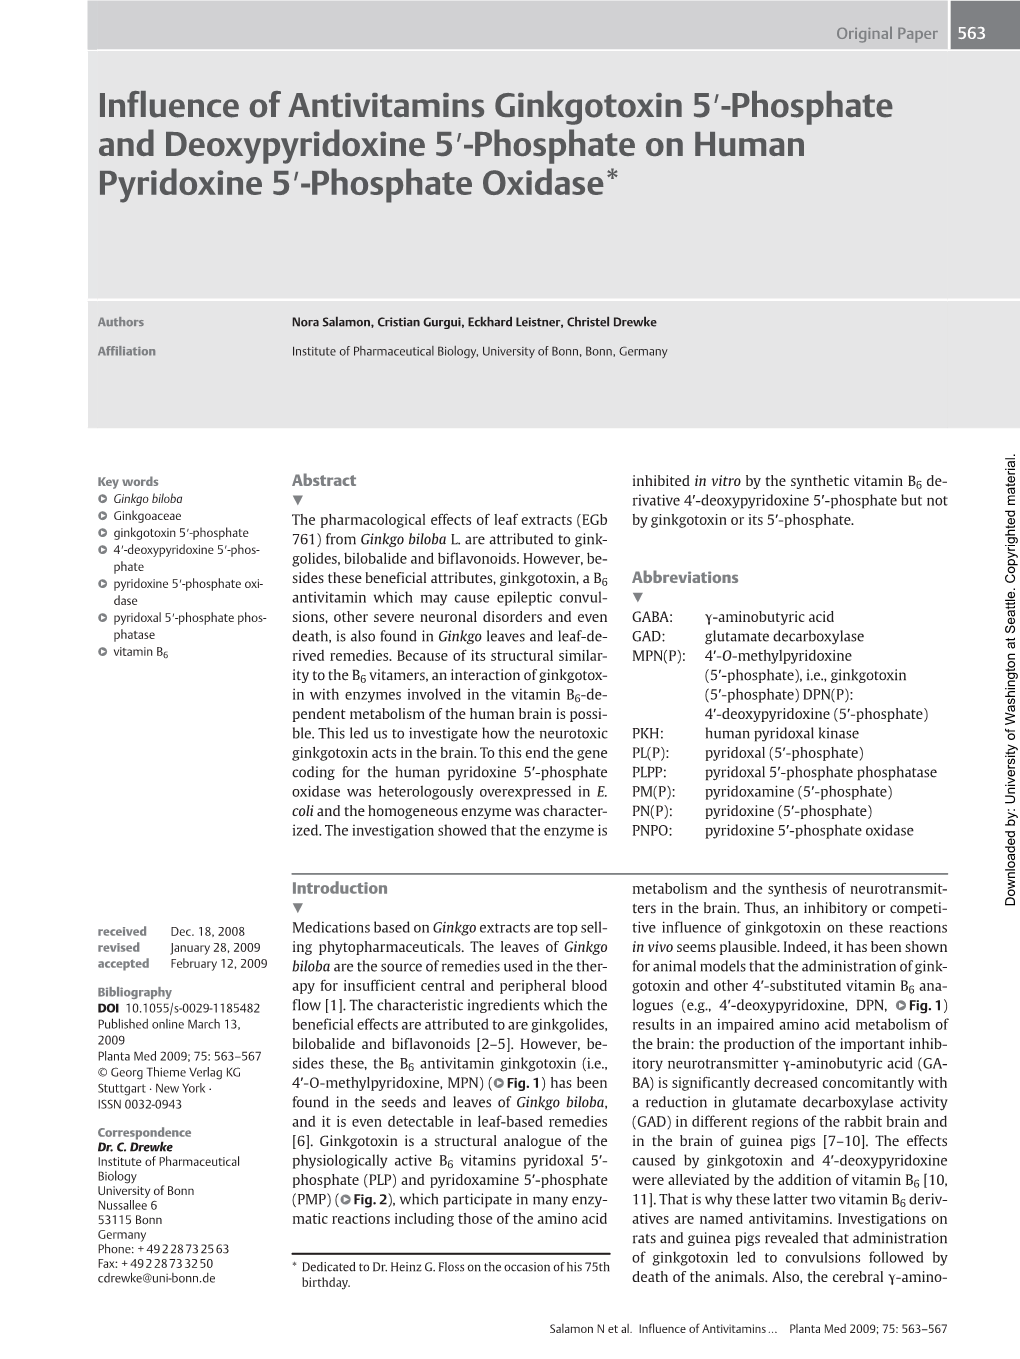 Influence of Antivitamins Ginkgotoxin 5′-Phosphate and Deoxypyridoxine 5′-Phosphate on Human Pyridoxine 5′-Phosphate Oxidase*